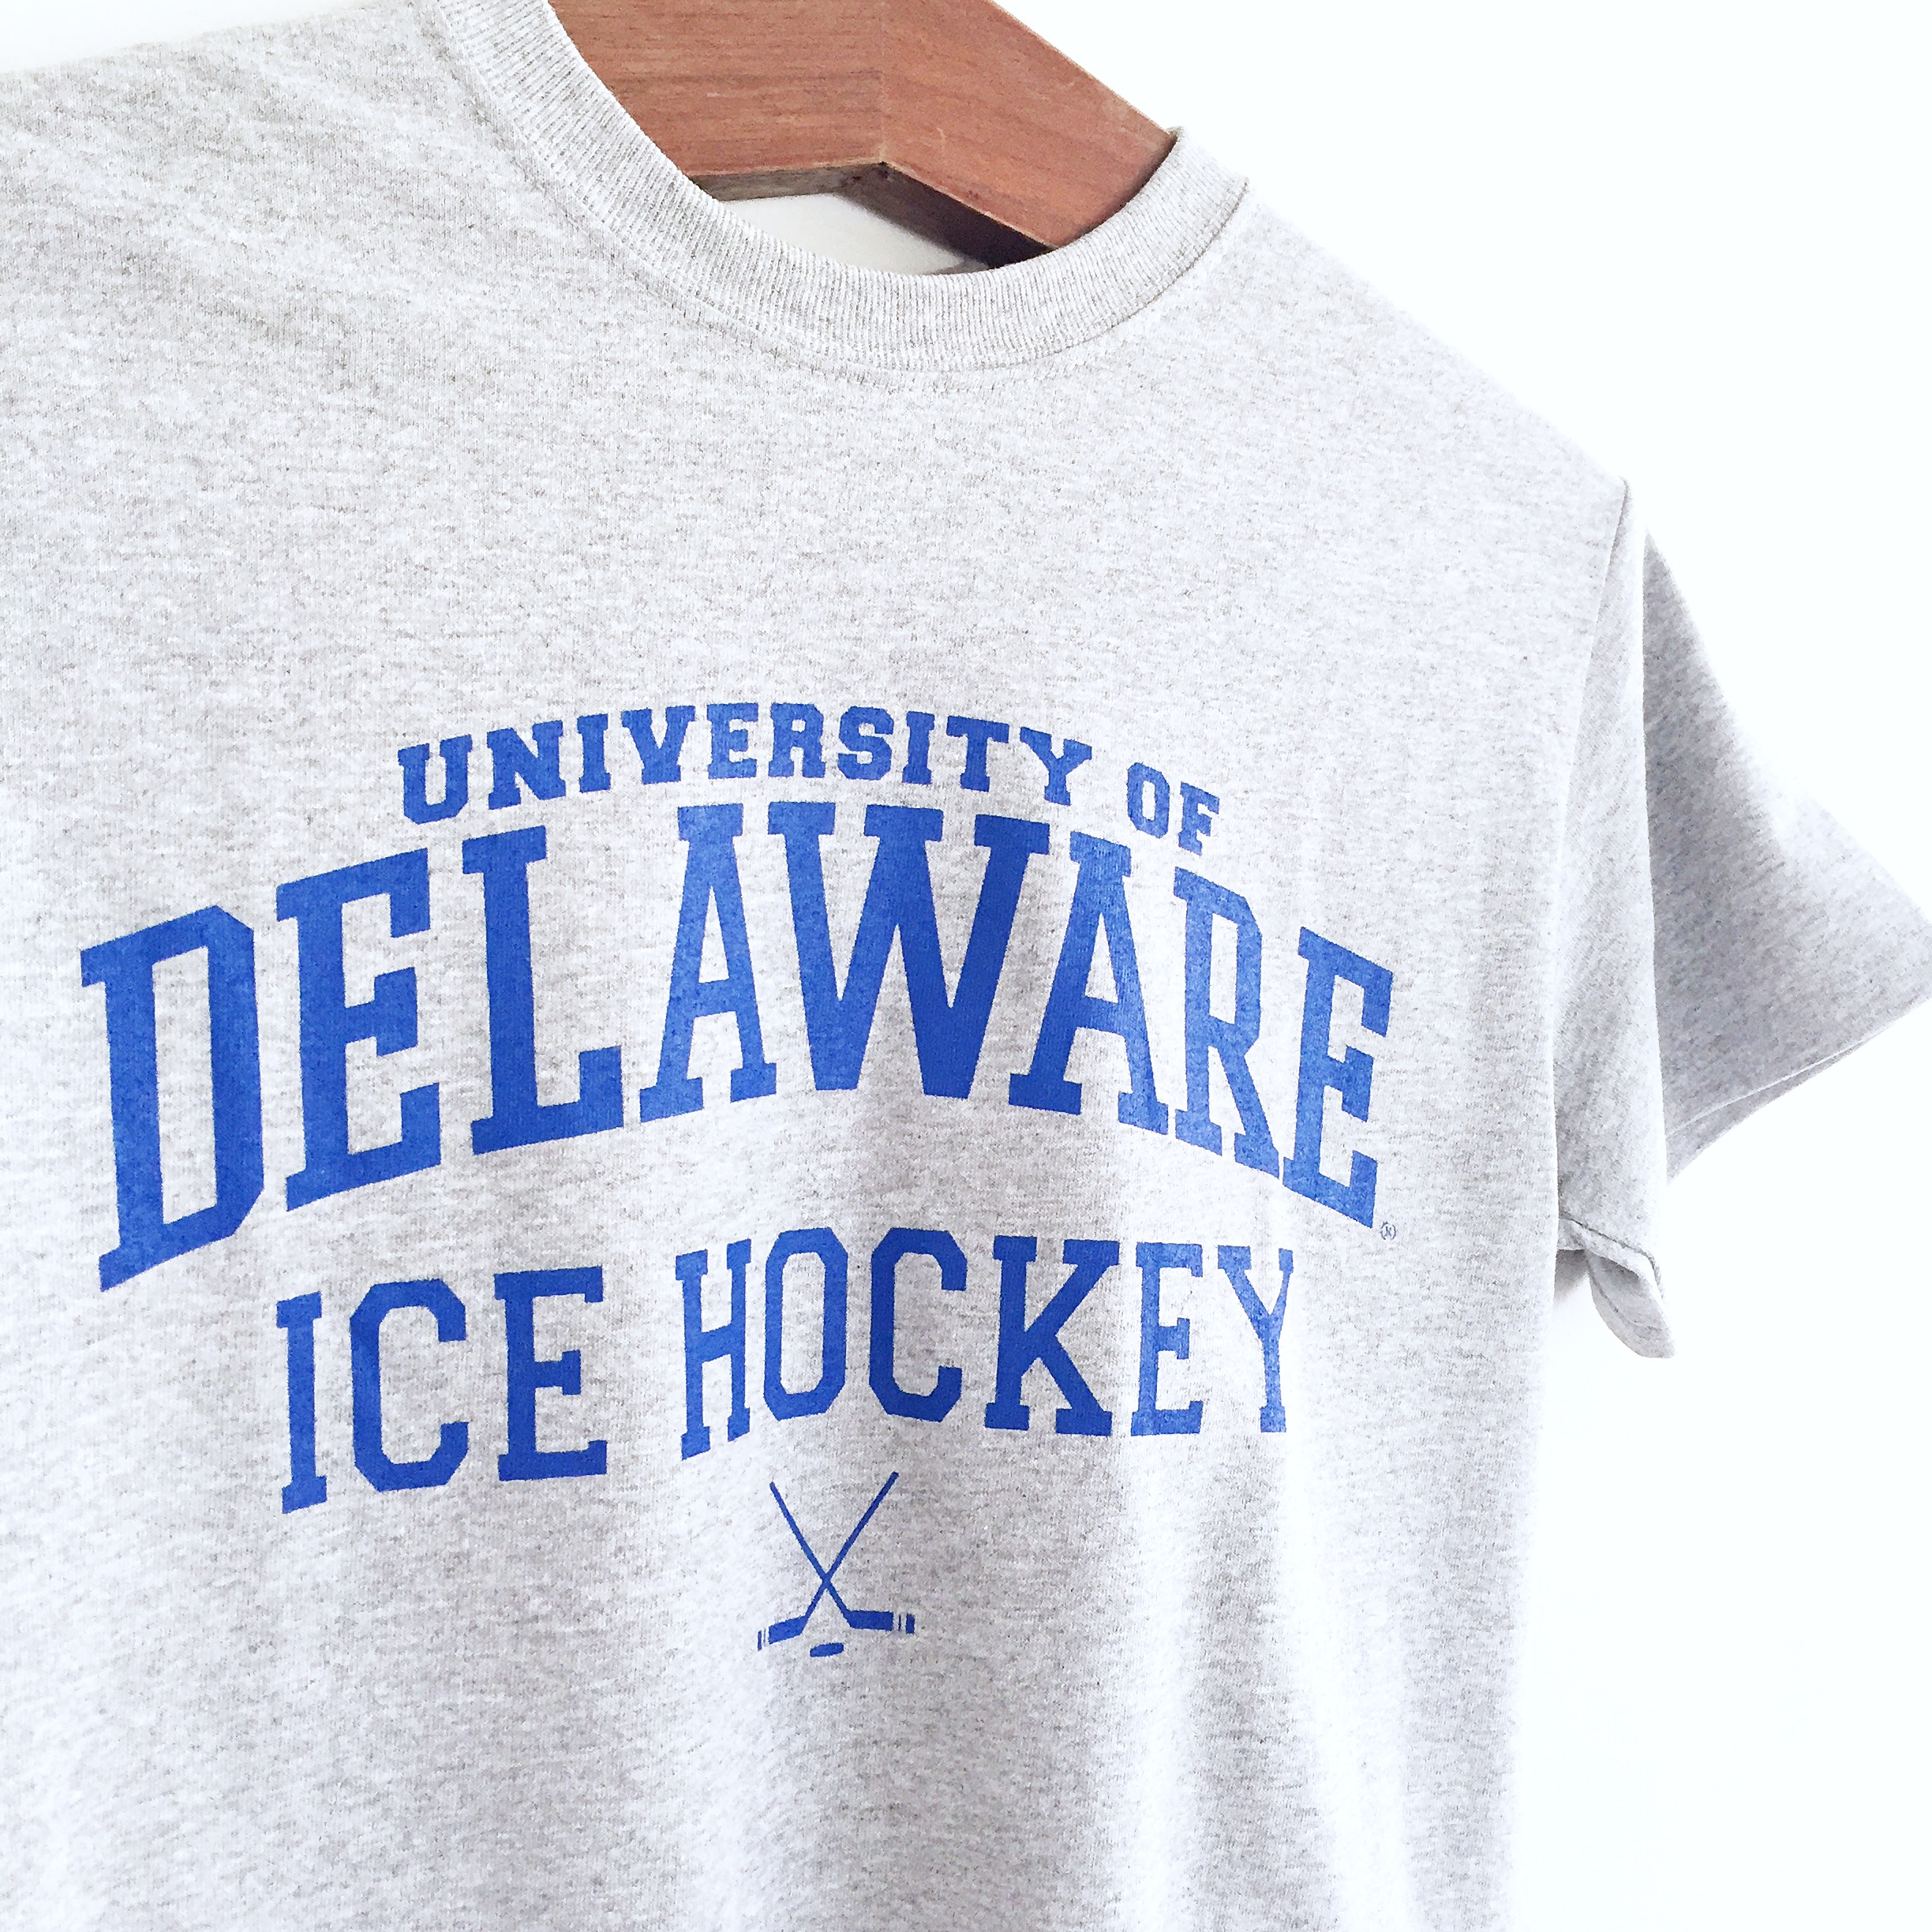 University of Delaware Ice Hockey T-shirt - Oxford